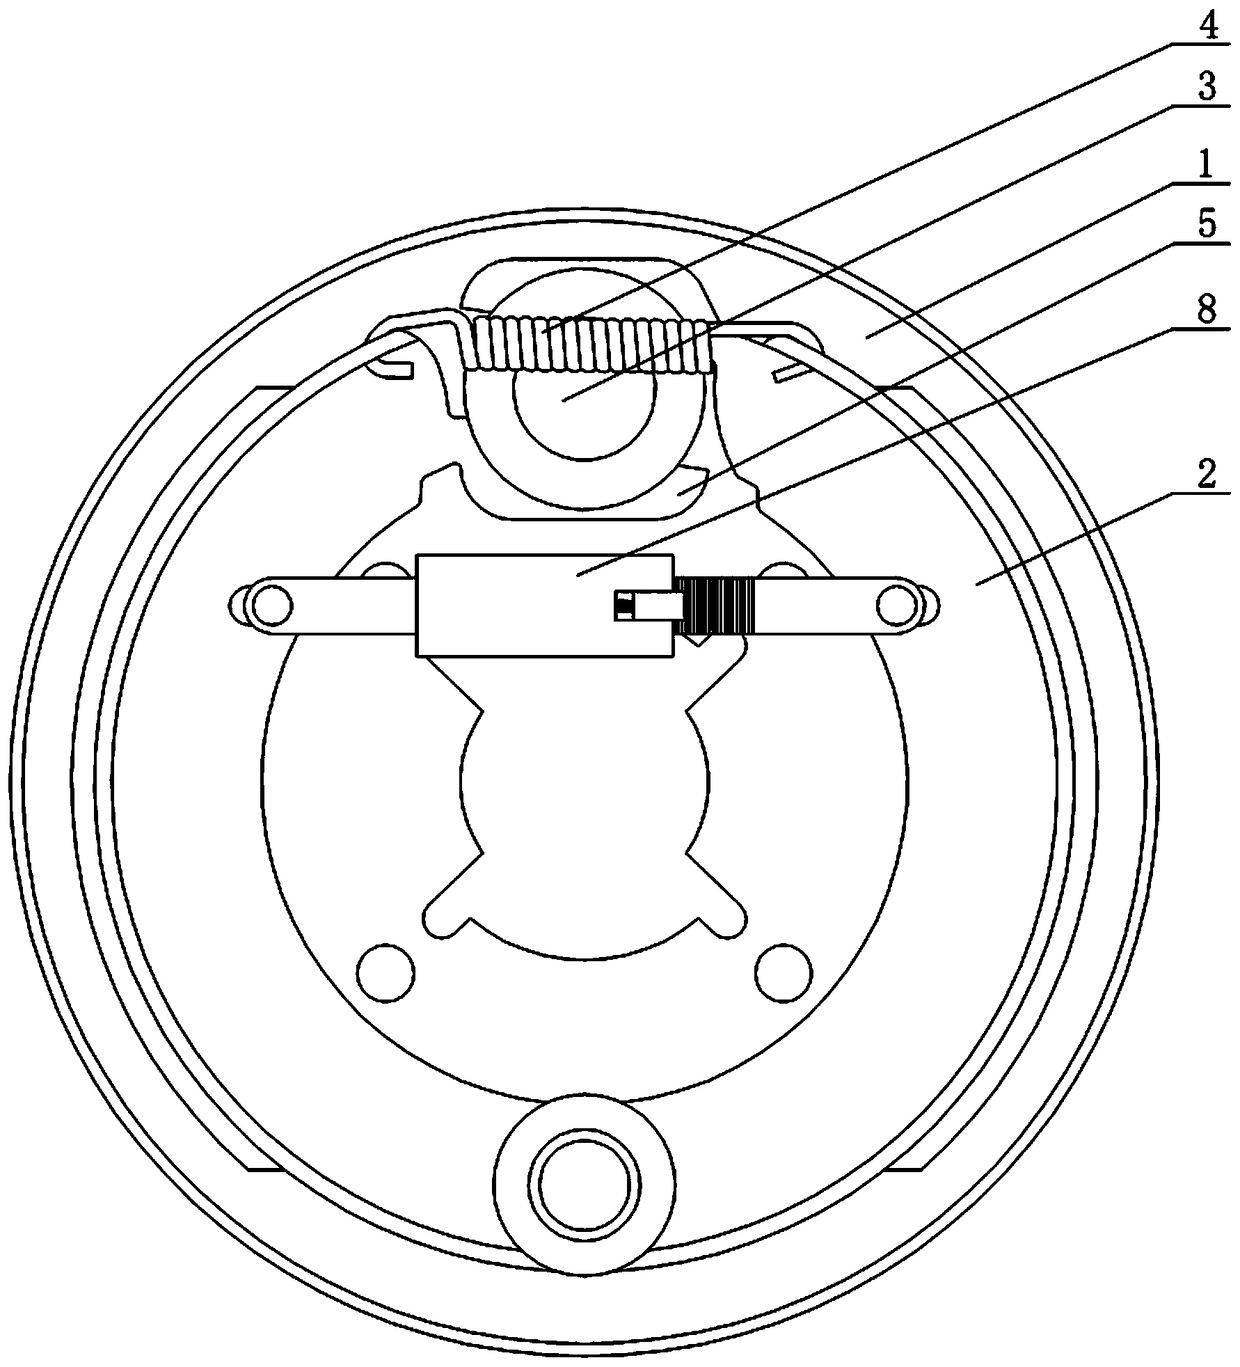 A self-adjusting human-driven drum brake